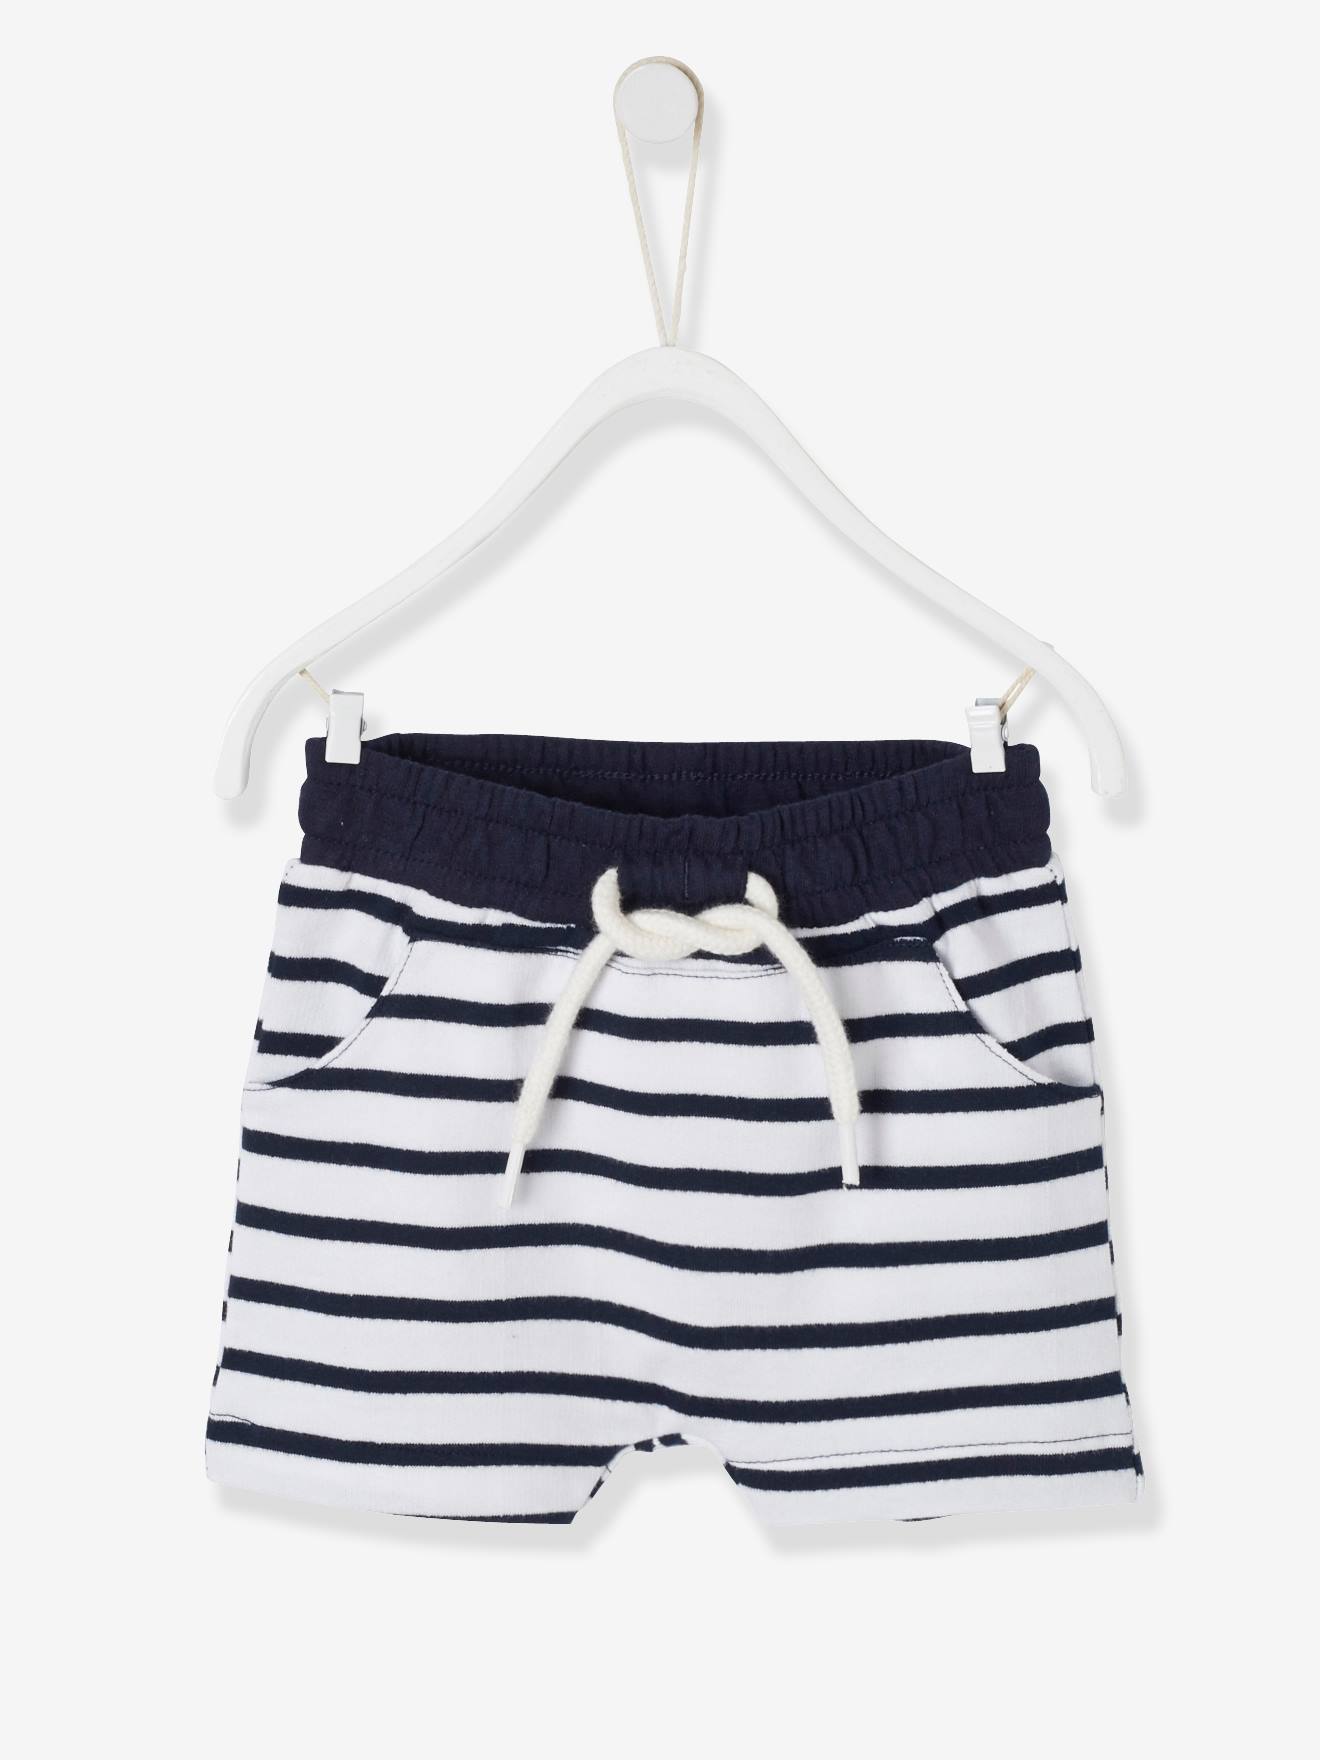 Bermuda Shorts in Fleece for Baby Boys dark blue stripes